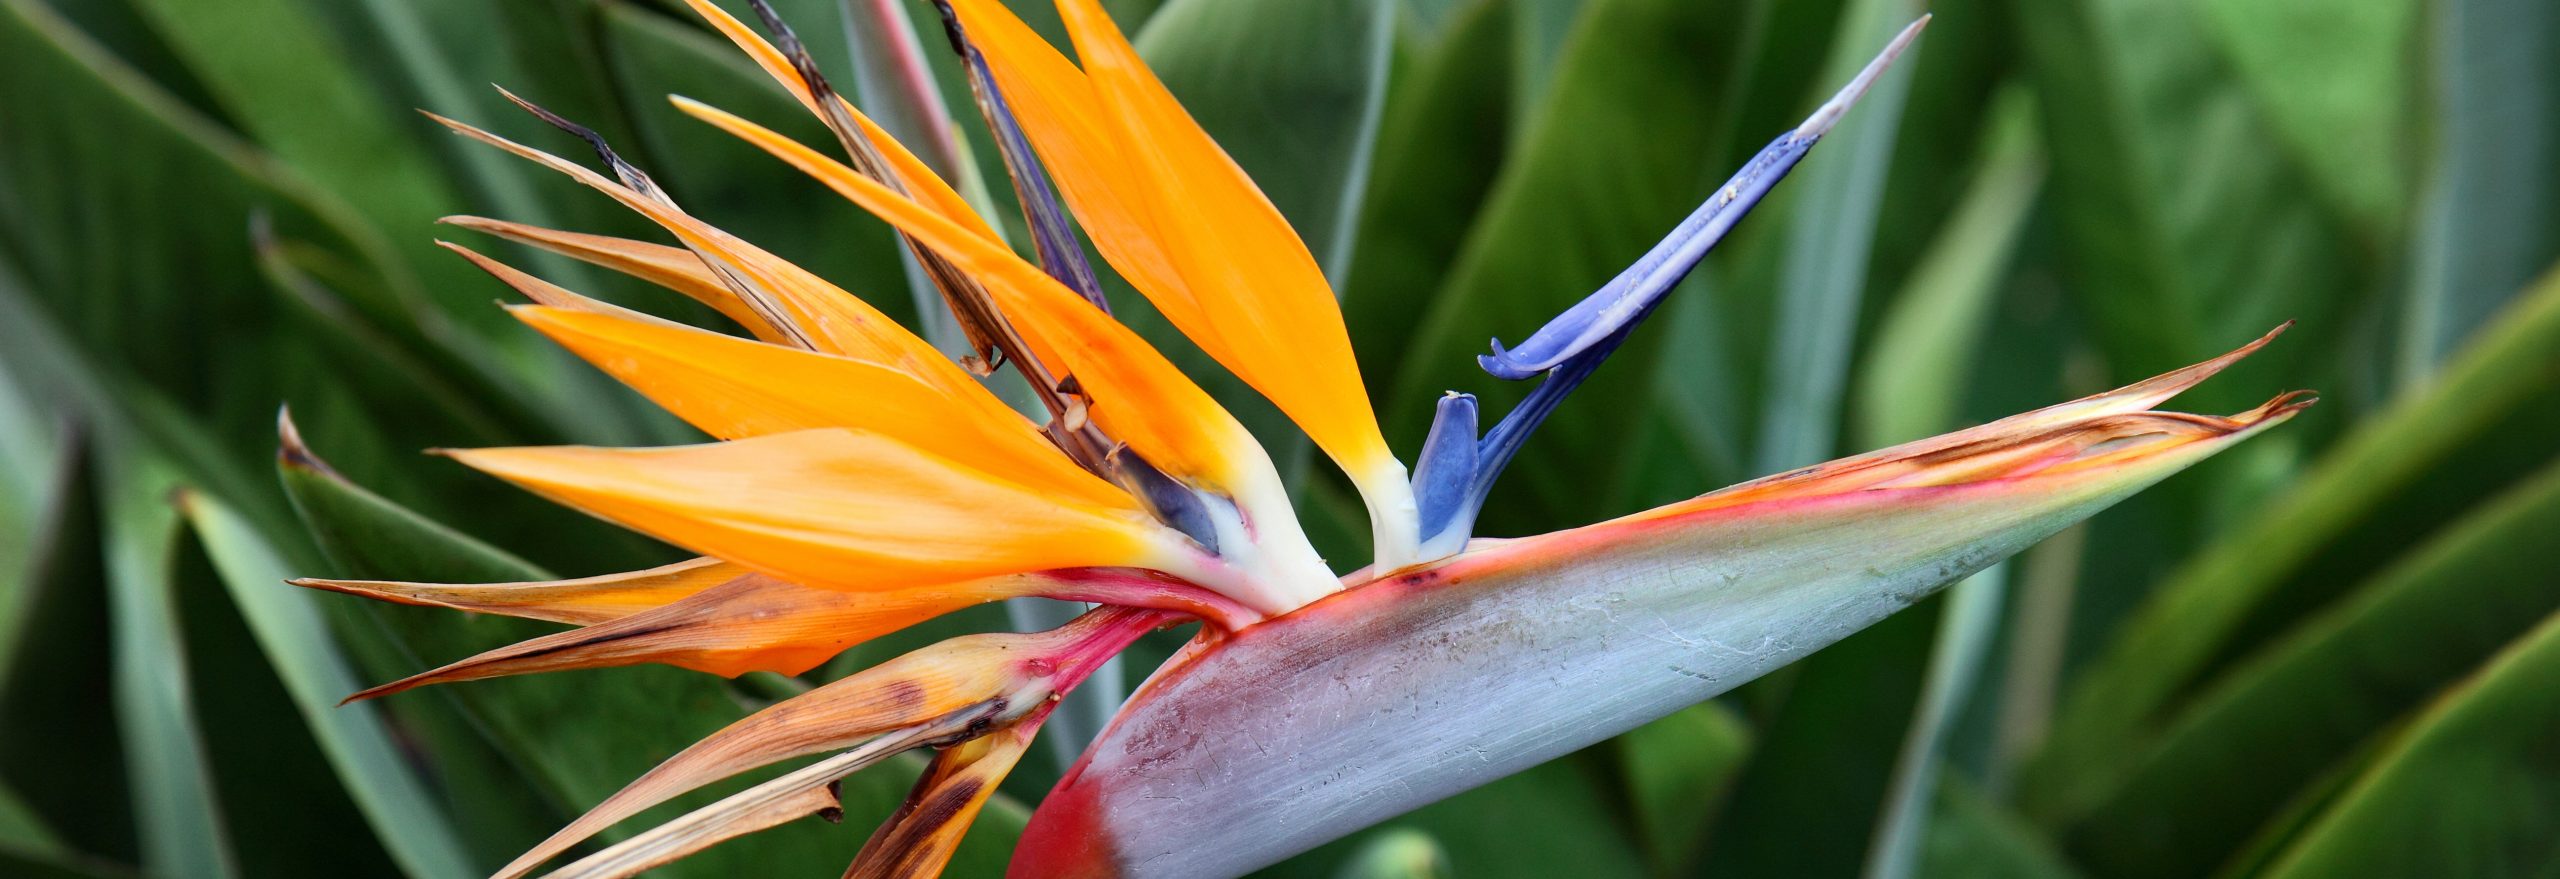 Hawaiian Flowers, Leis and Gifts - With Our Aloha